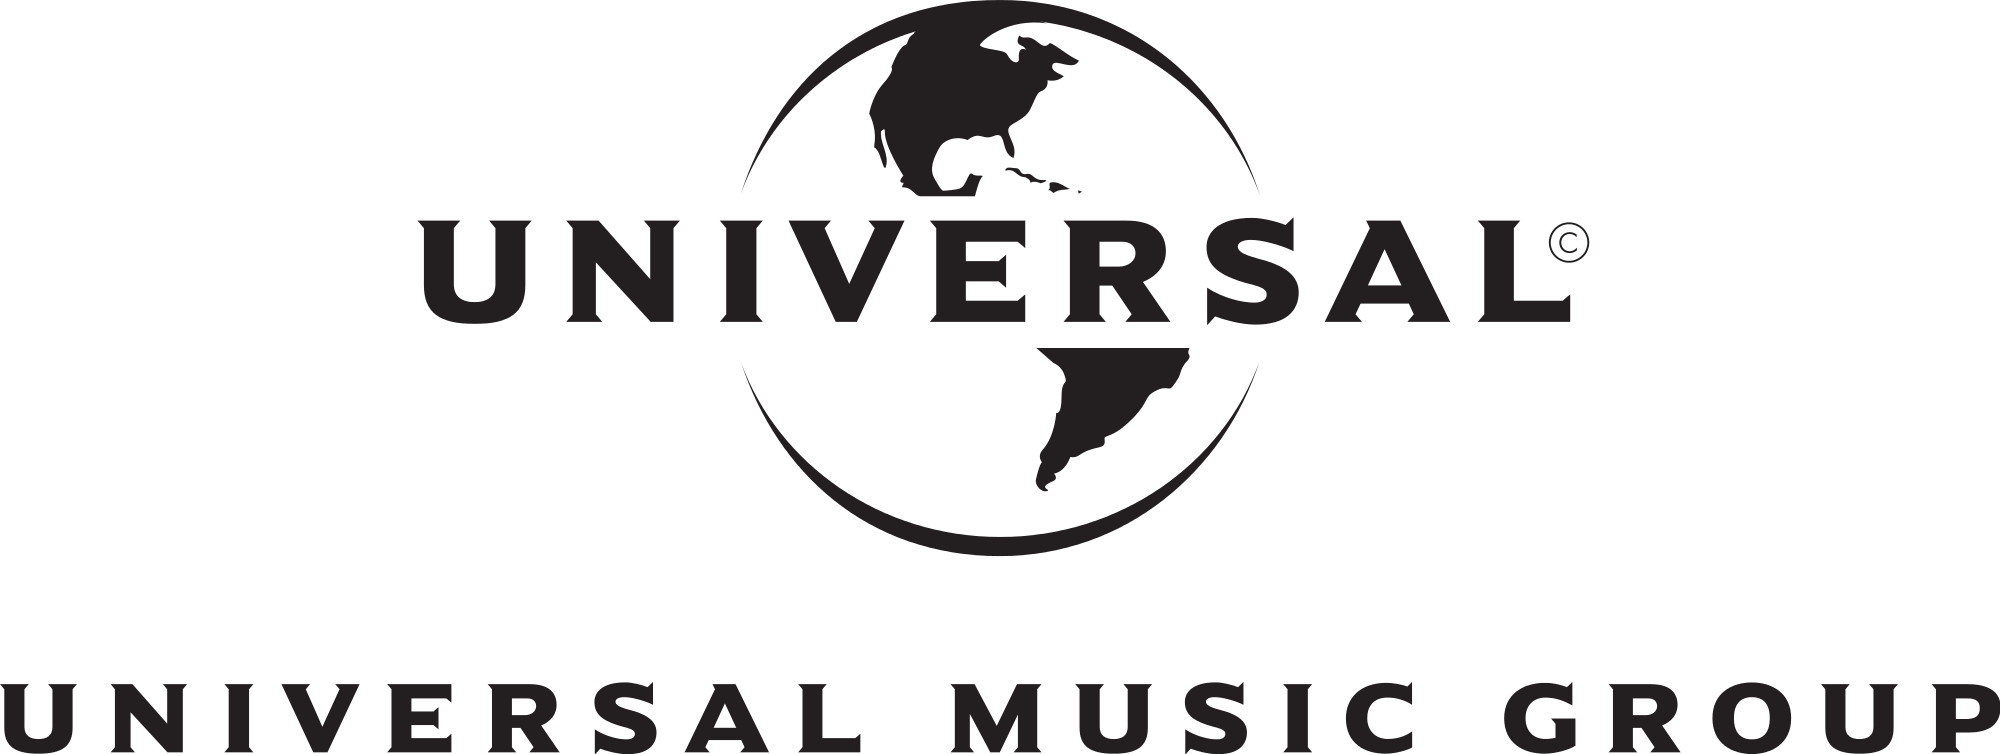 Universal Music launch initiative to boost music startups worldwide